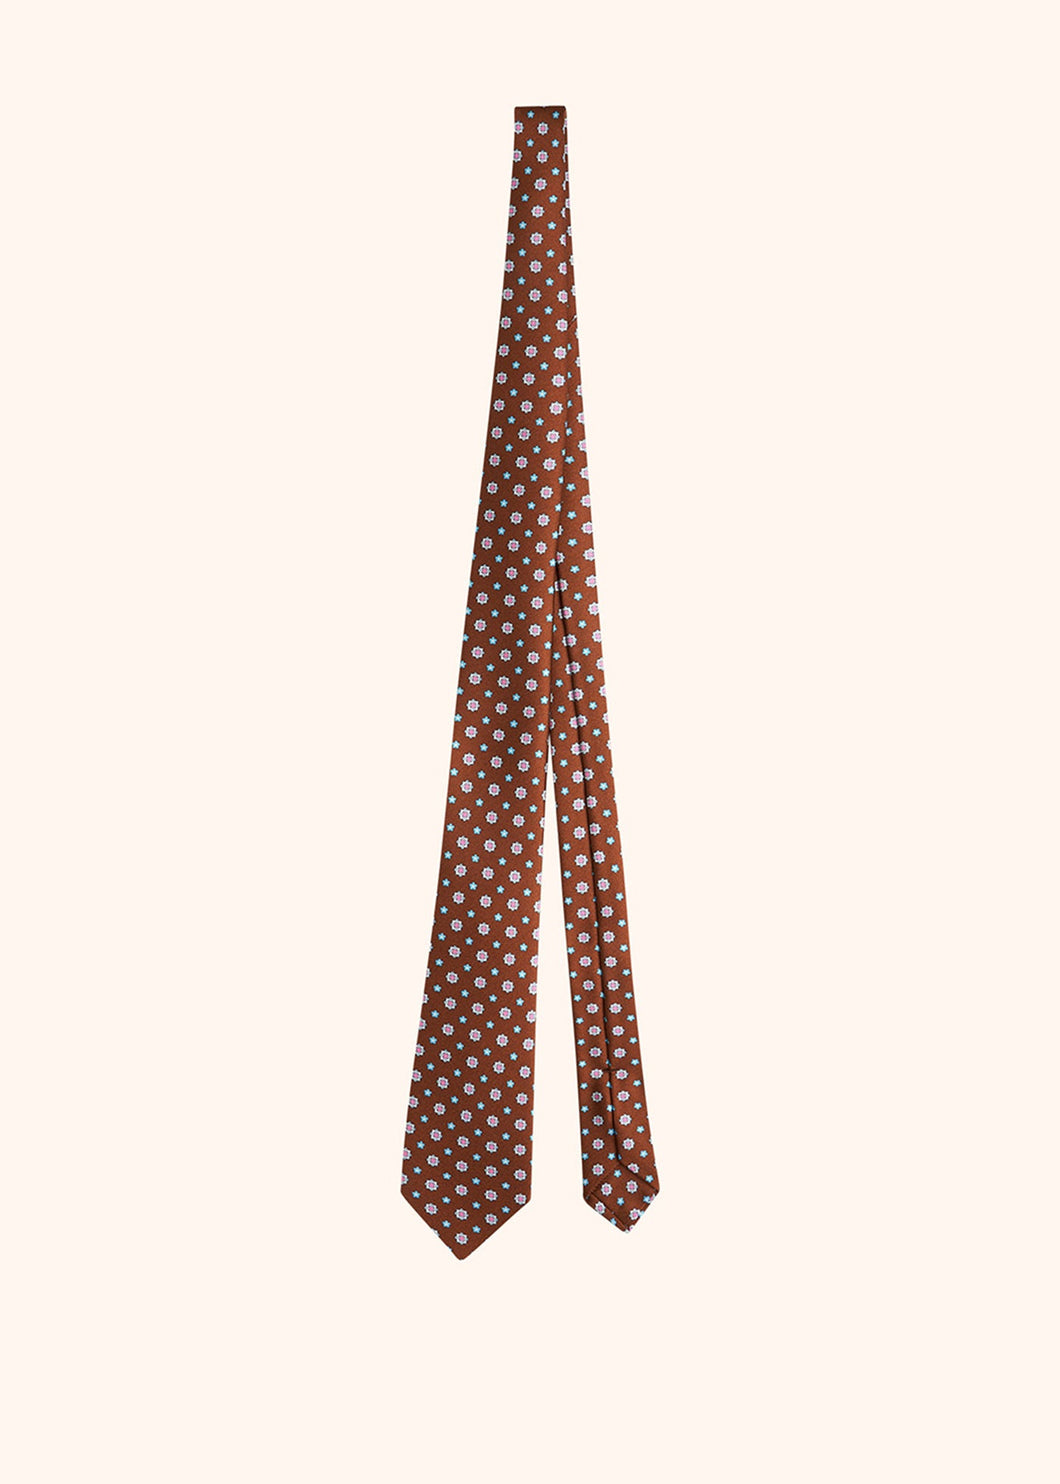 Kiton brown, cornflower blue, white and orange floral design tie for man, made of silk